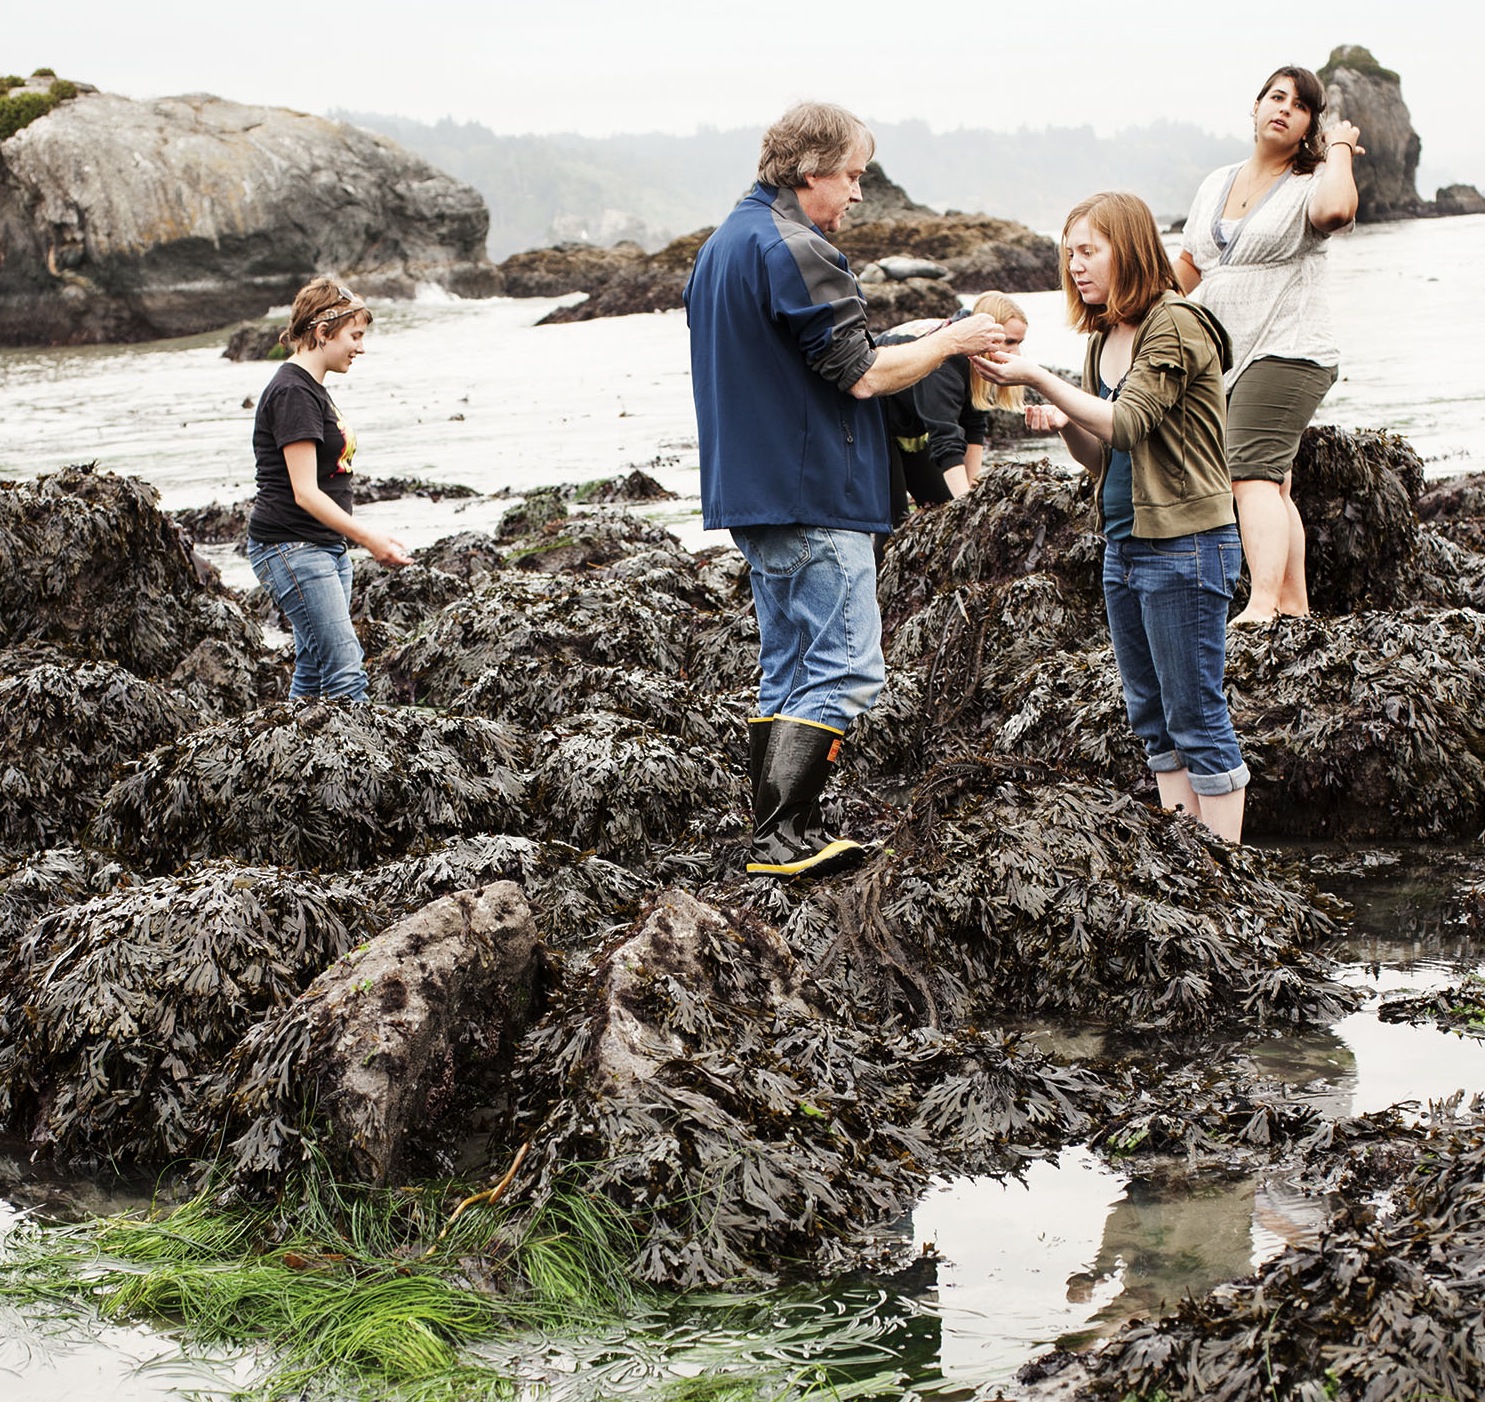 Sean Craig and students explore the North Coast's rocky intertidal habitats. Credit: HSU